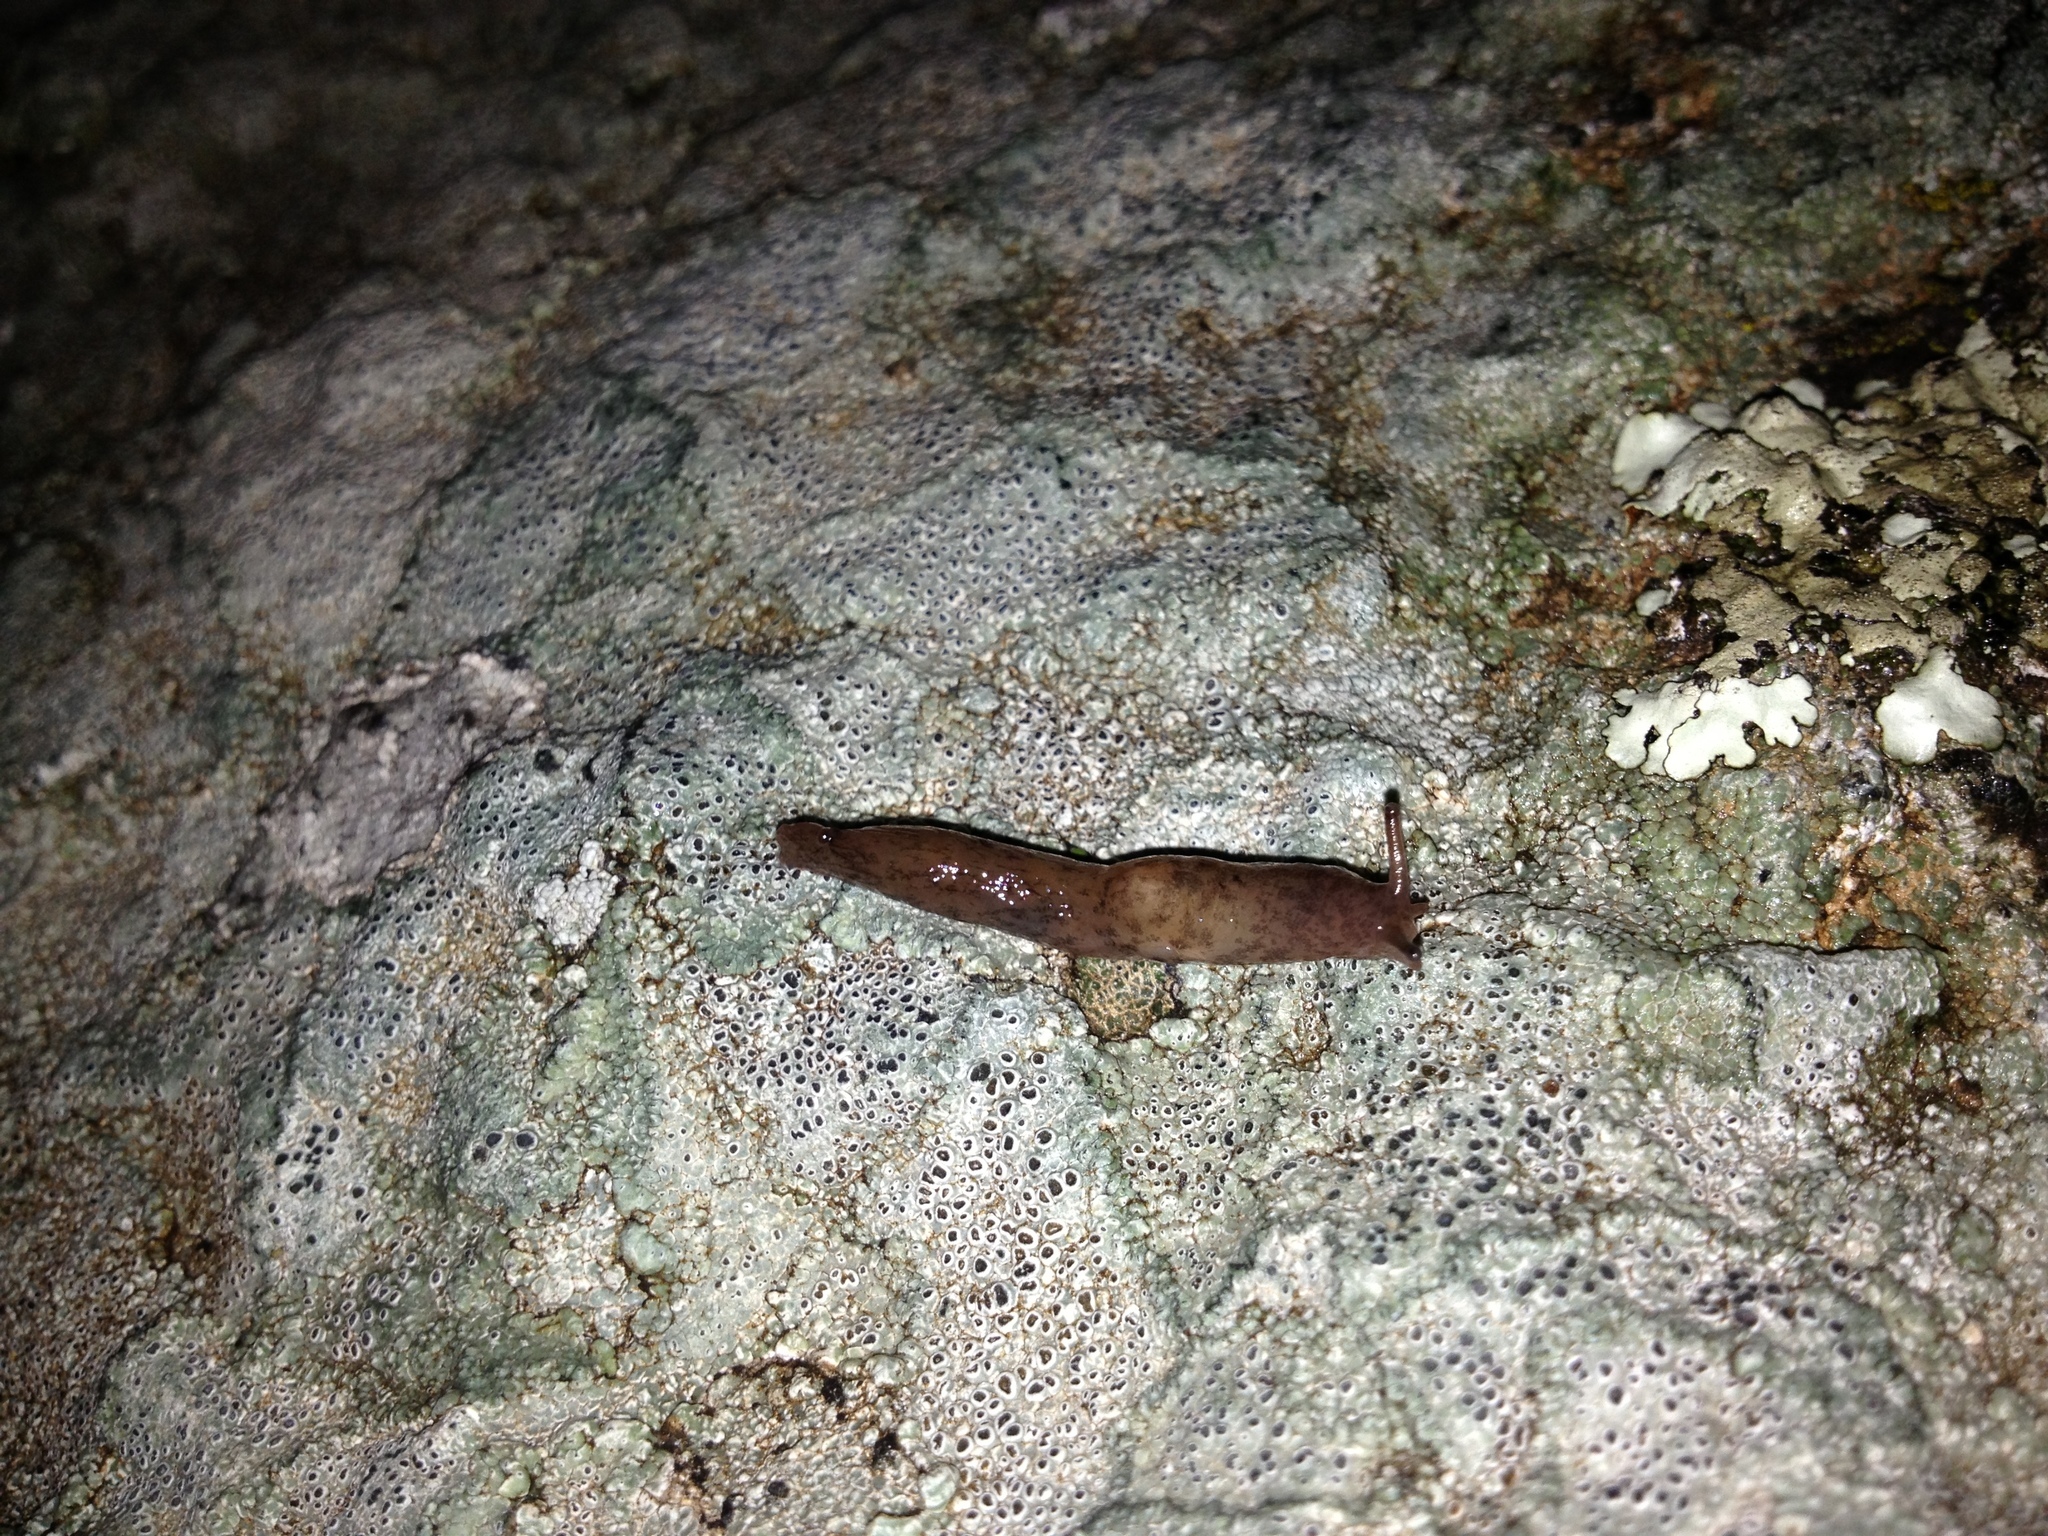 Image of caruana's slug